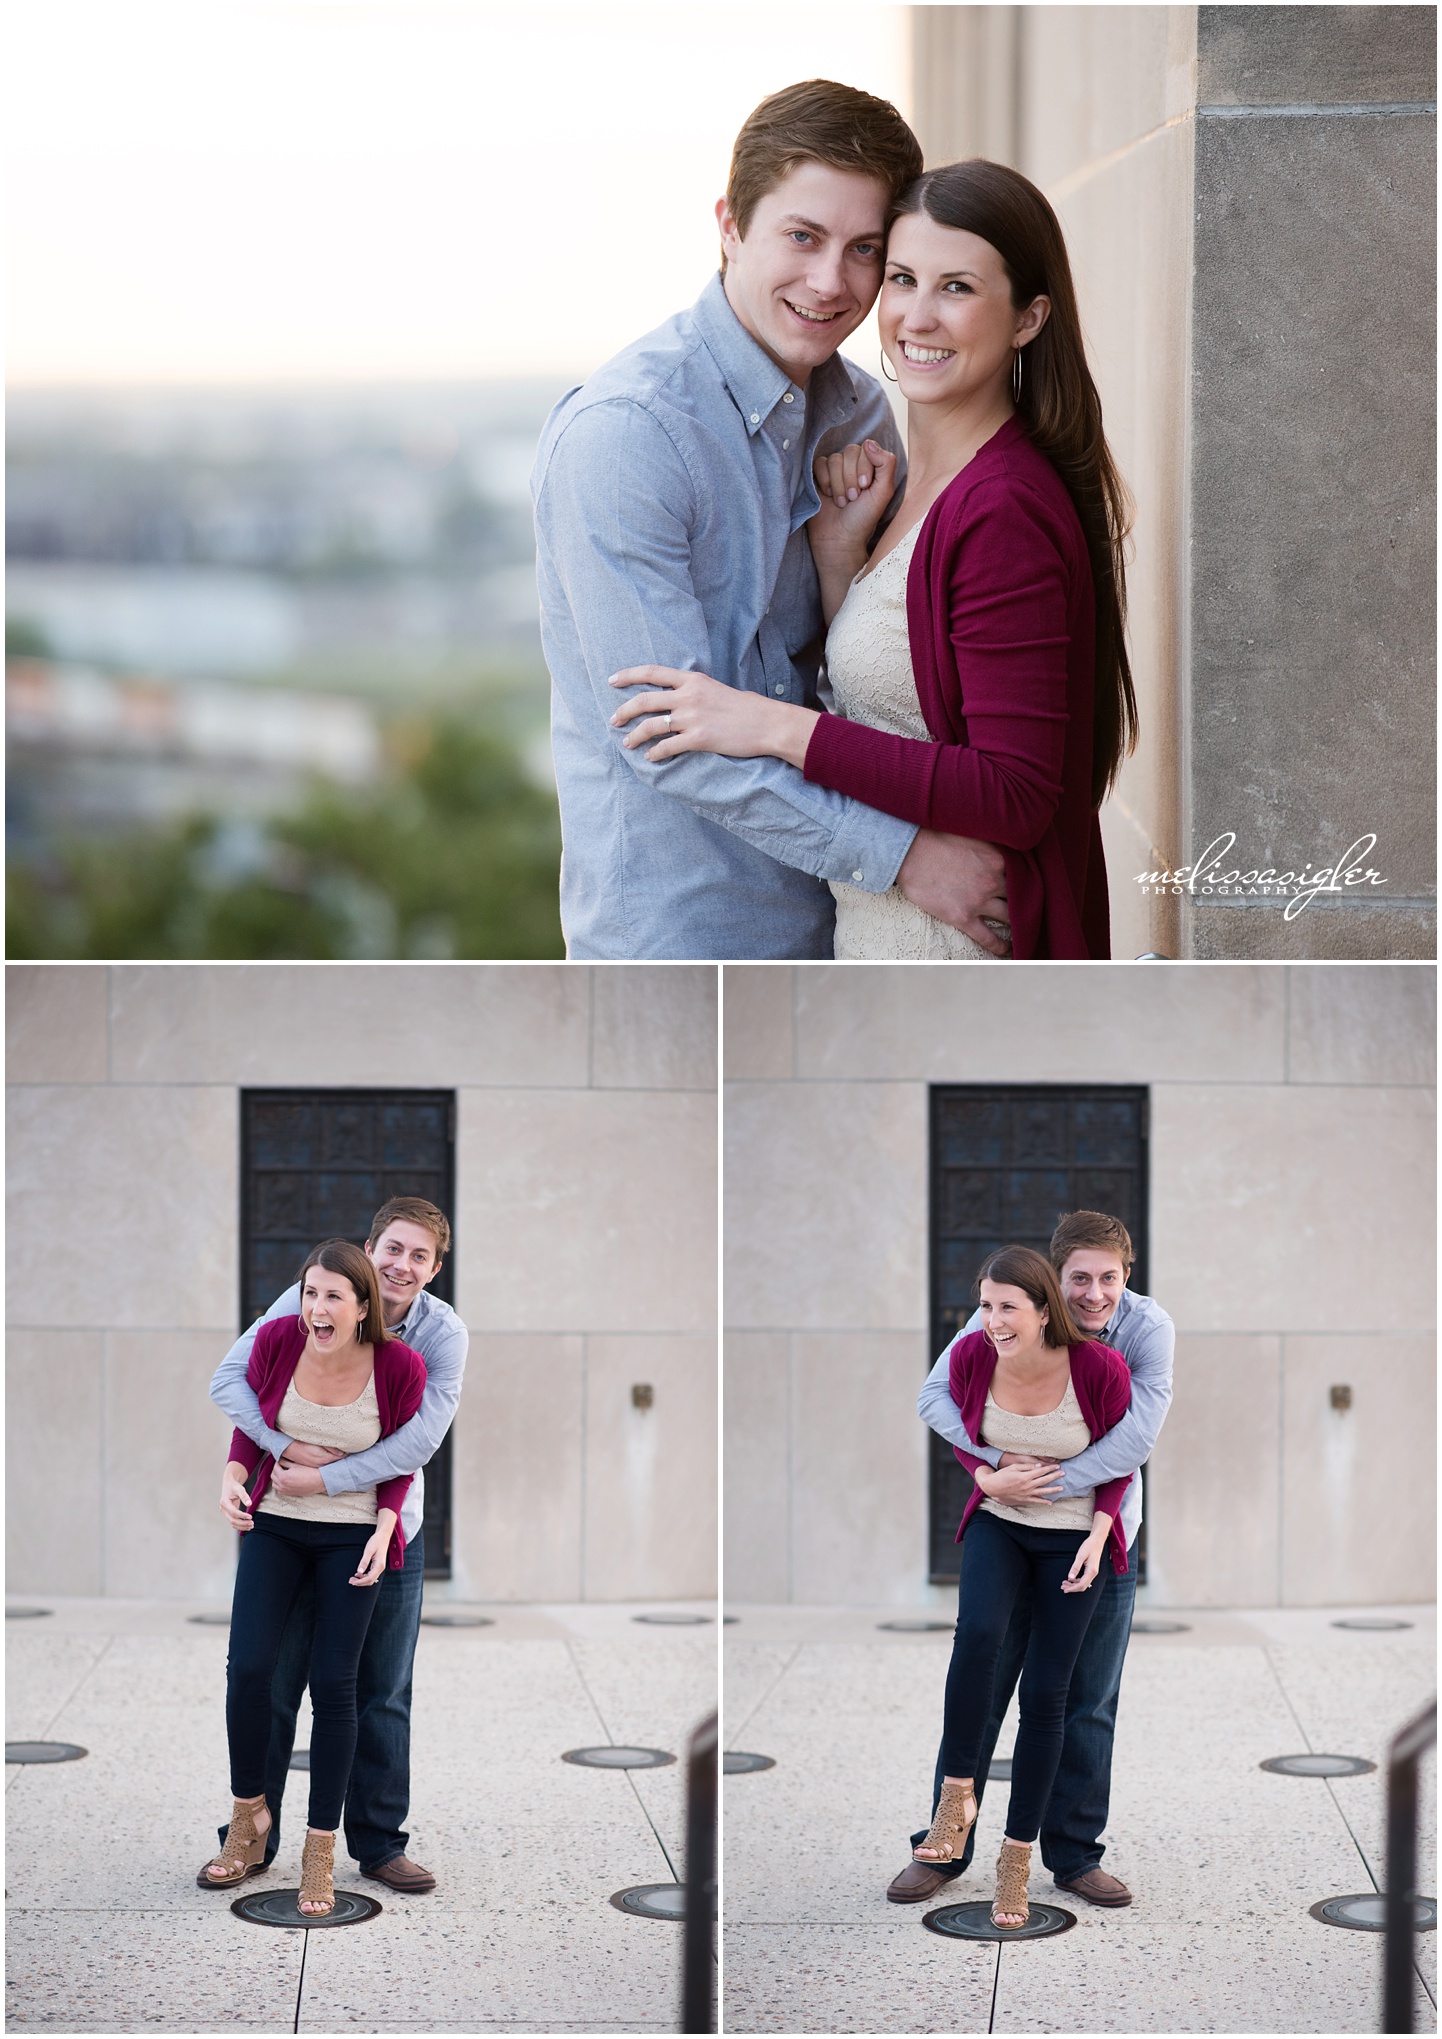 Engagement session at Liberty Memorial by Kansas City Wedding photographer Melissa Sigler